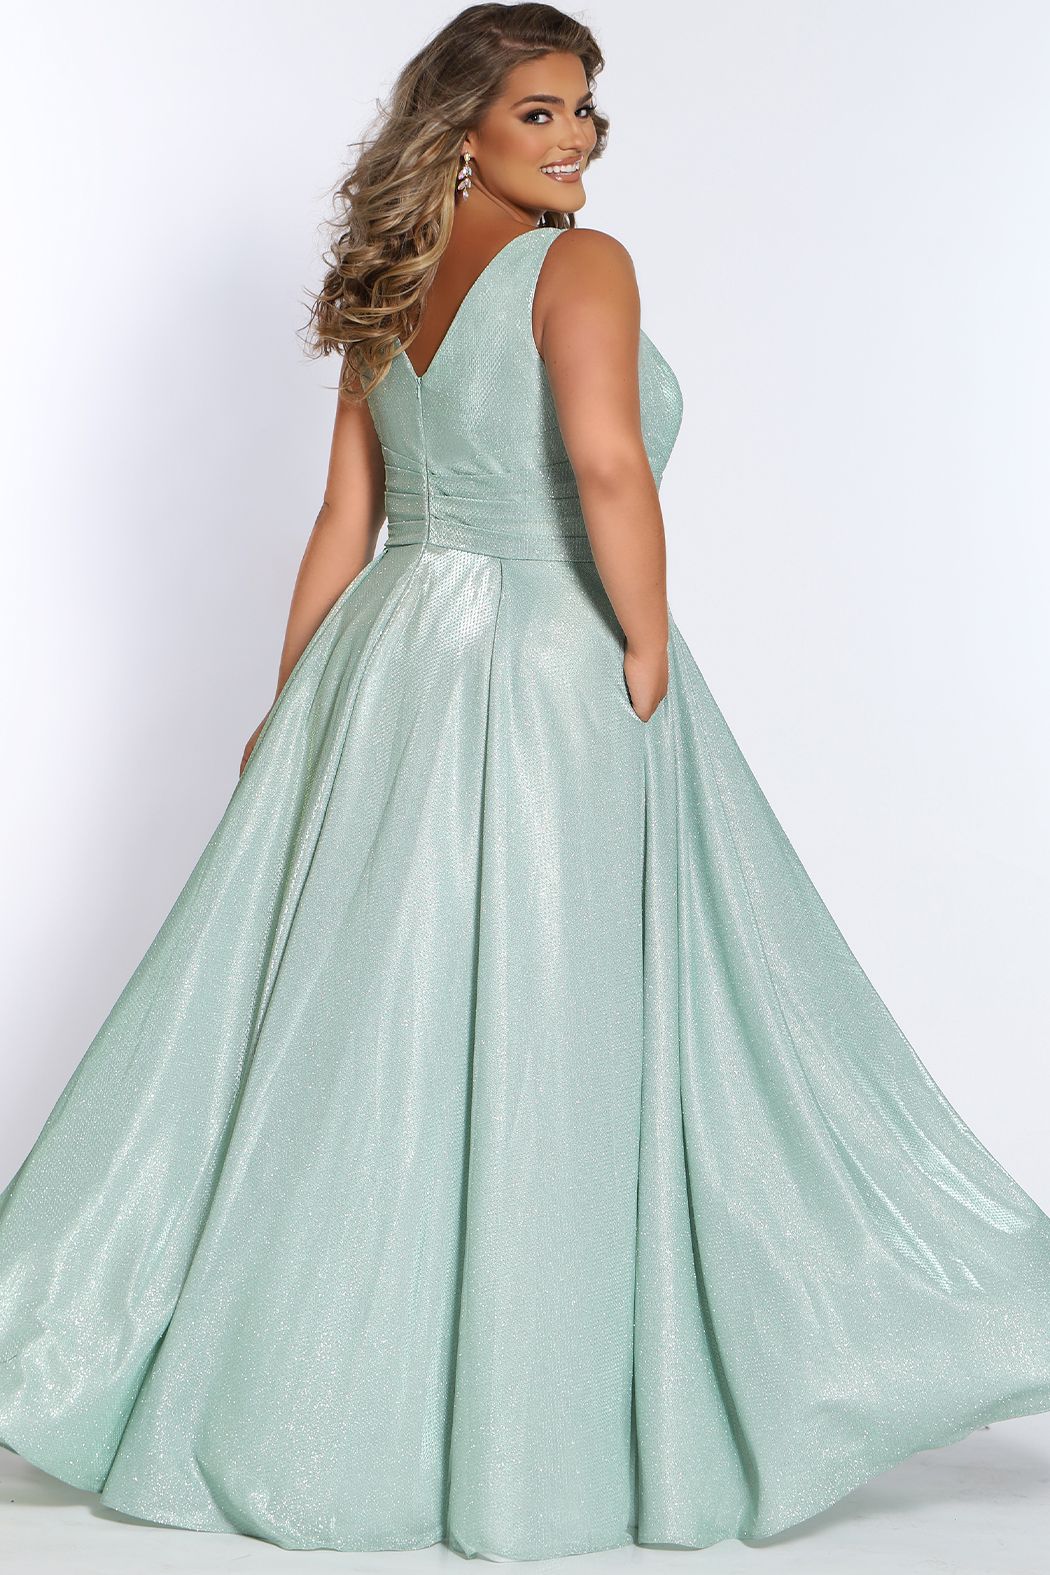 Sydney's Closet SC7324 Size 24 Sage Metallic Prom Dress A Line V Neckline Plus Sized SC 7324